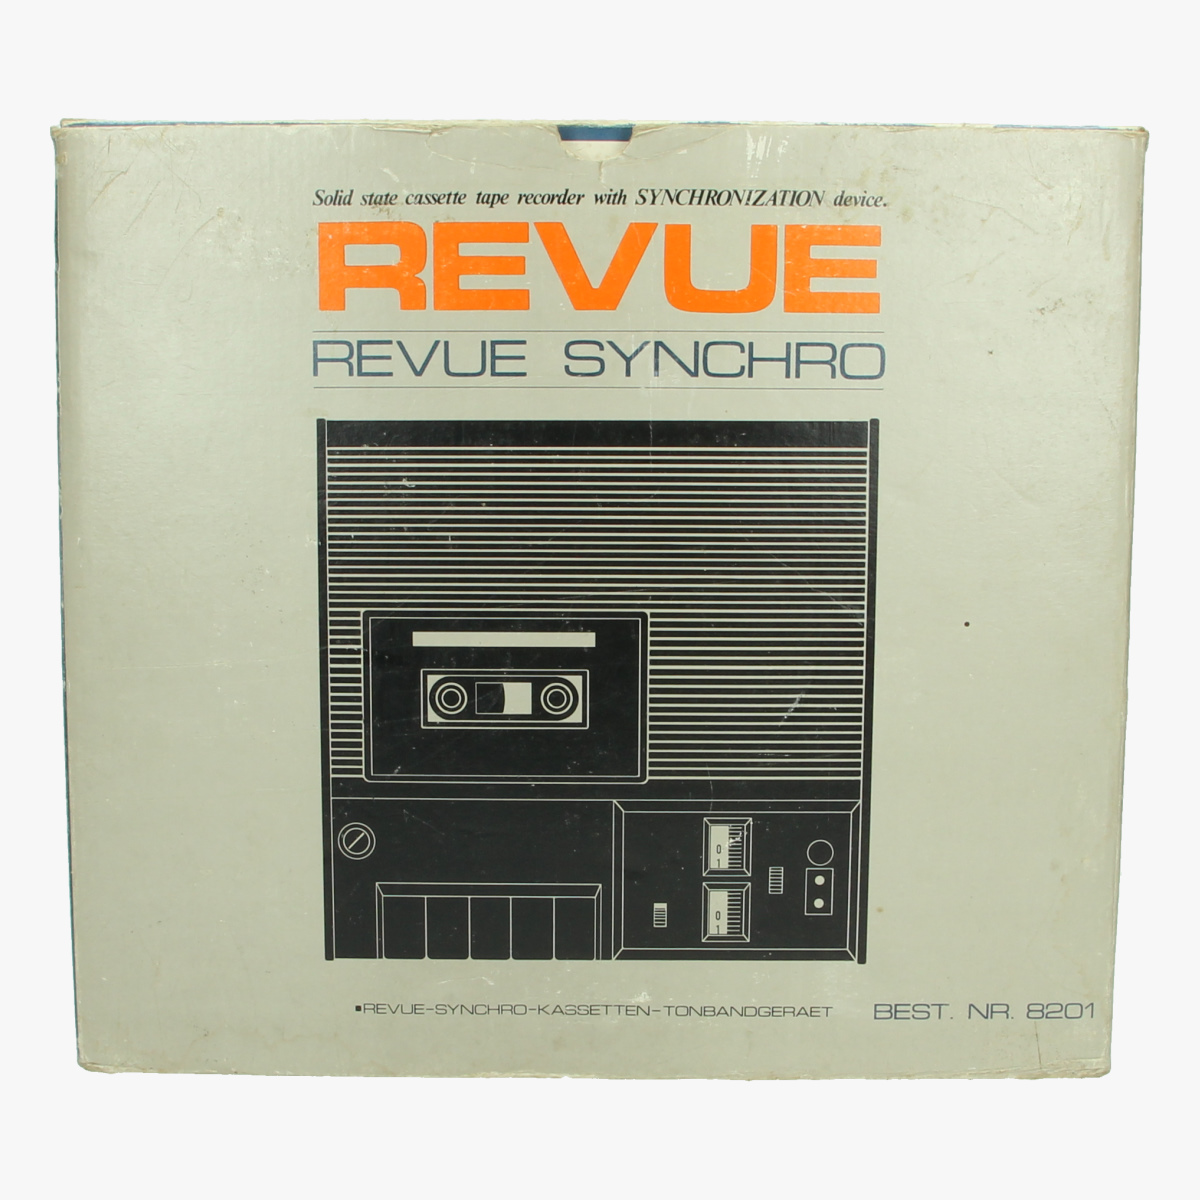 Afbeeldingen van Kasettenspeler, Revue Synchro , Tape Recorder Best. Nr. 8201